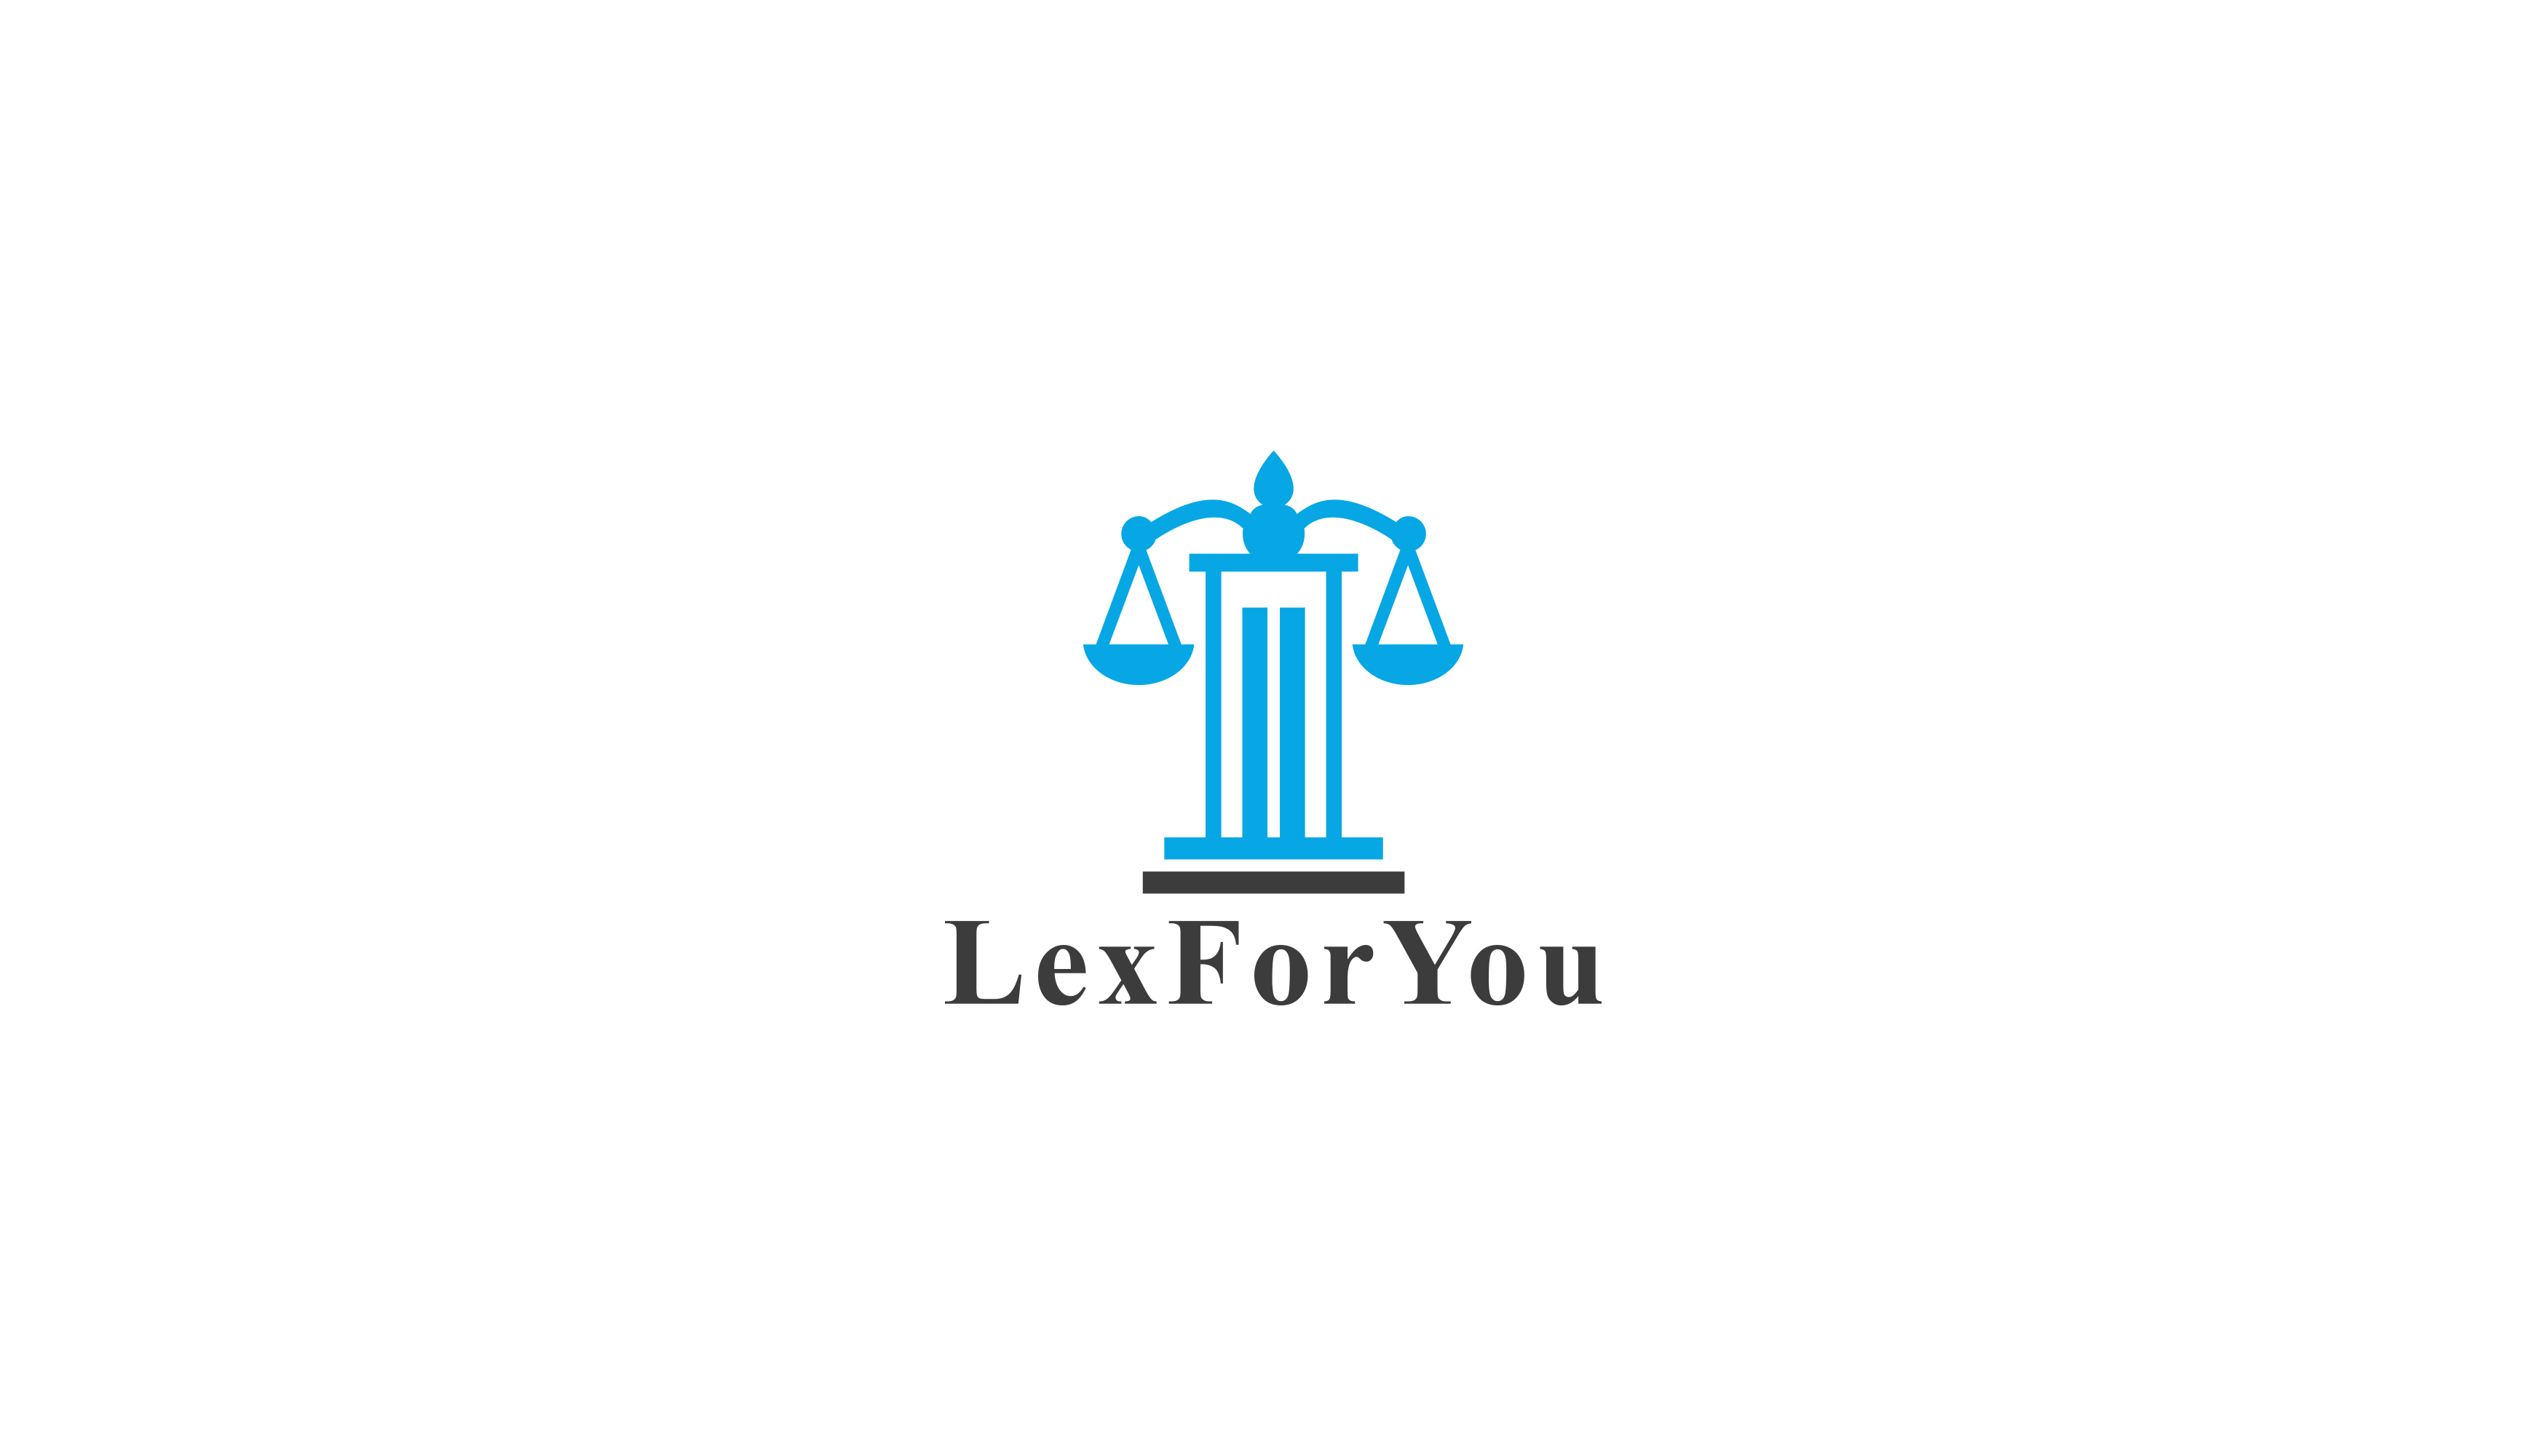 LexForYou Design #1